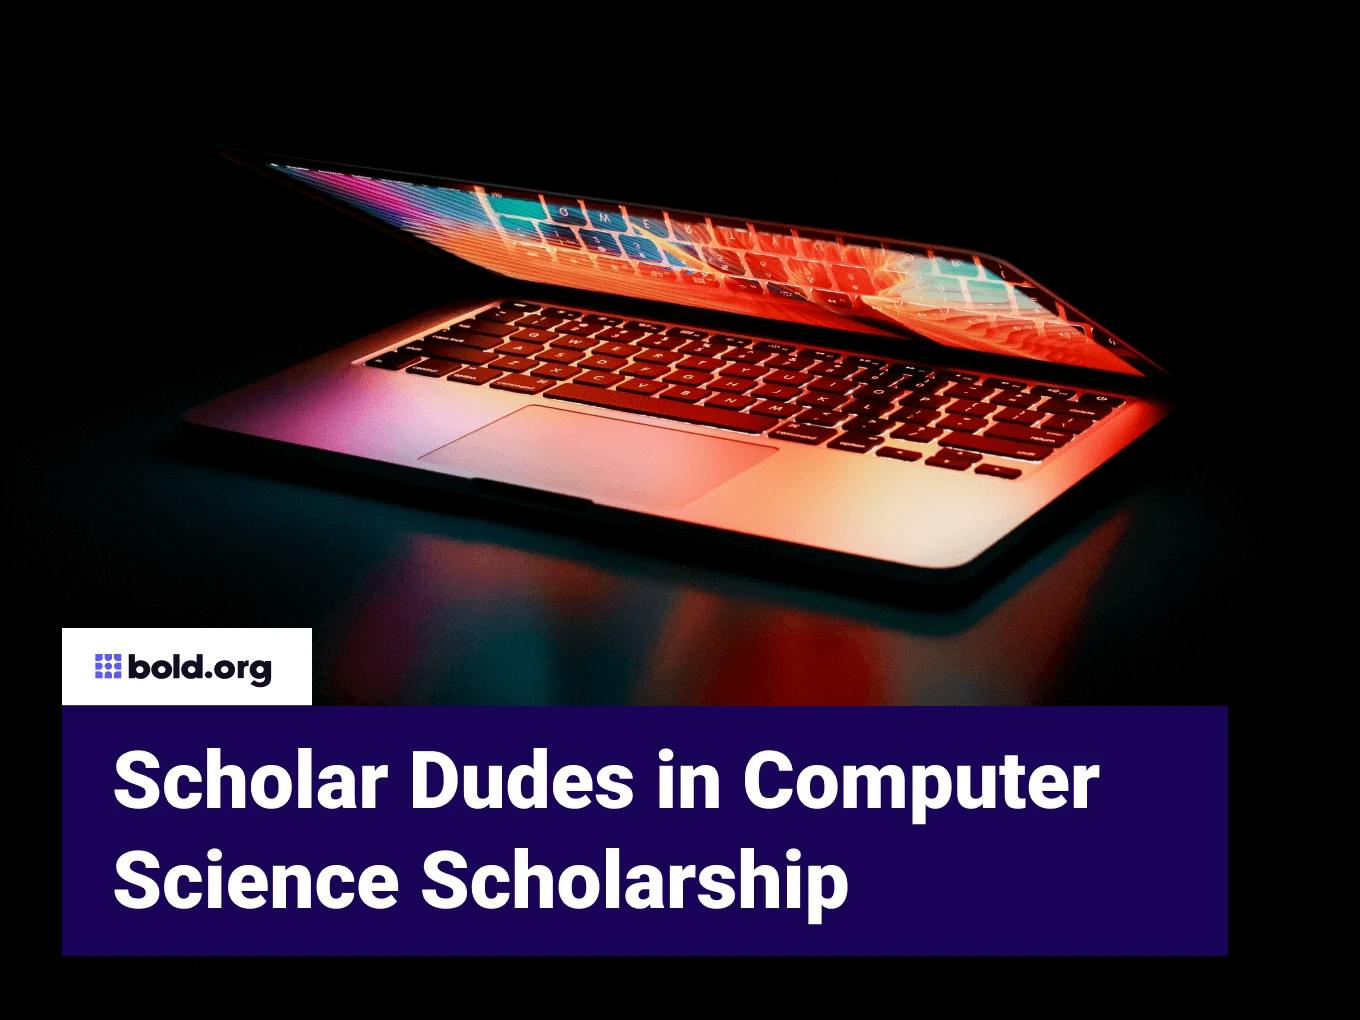 Scholar Dudes in Computer Science Scholarship